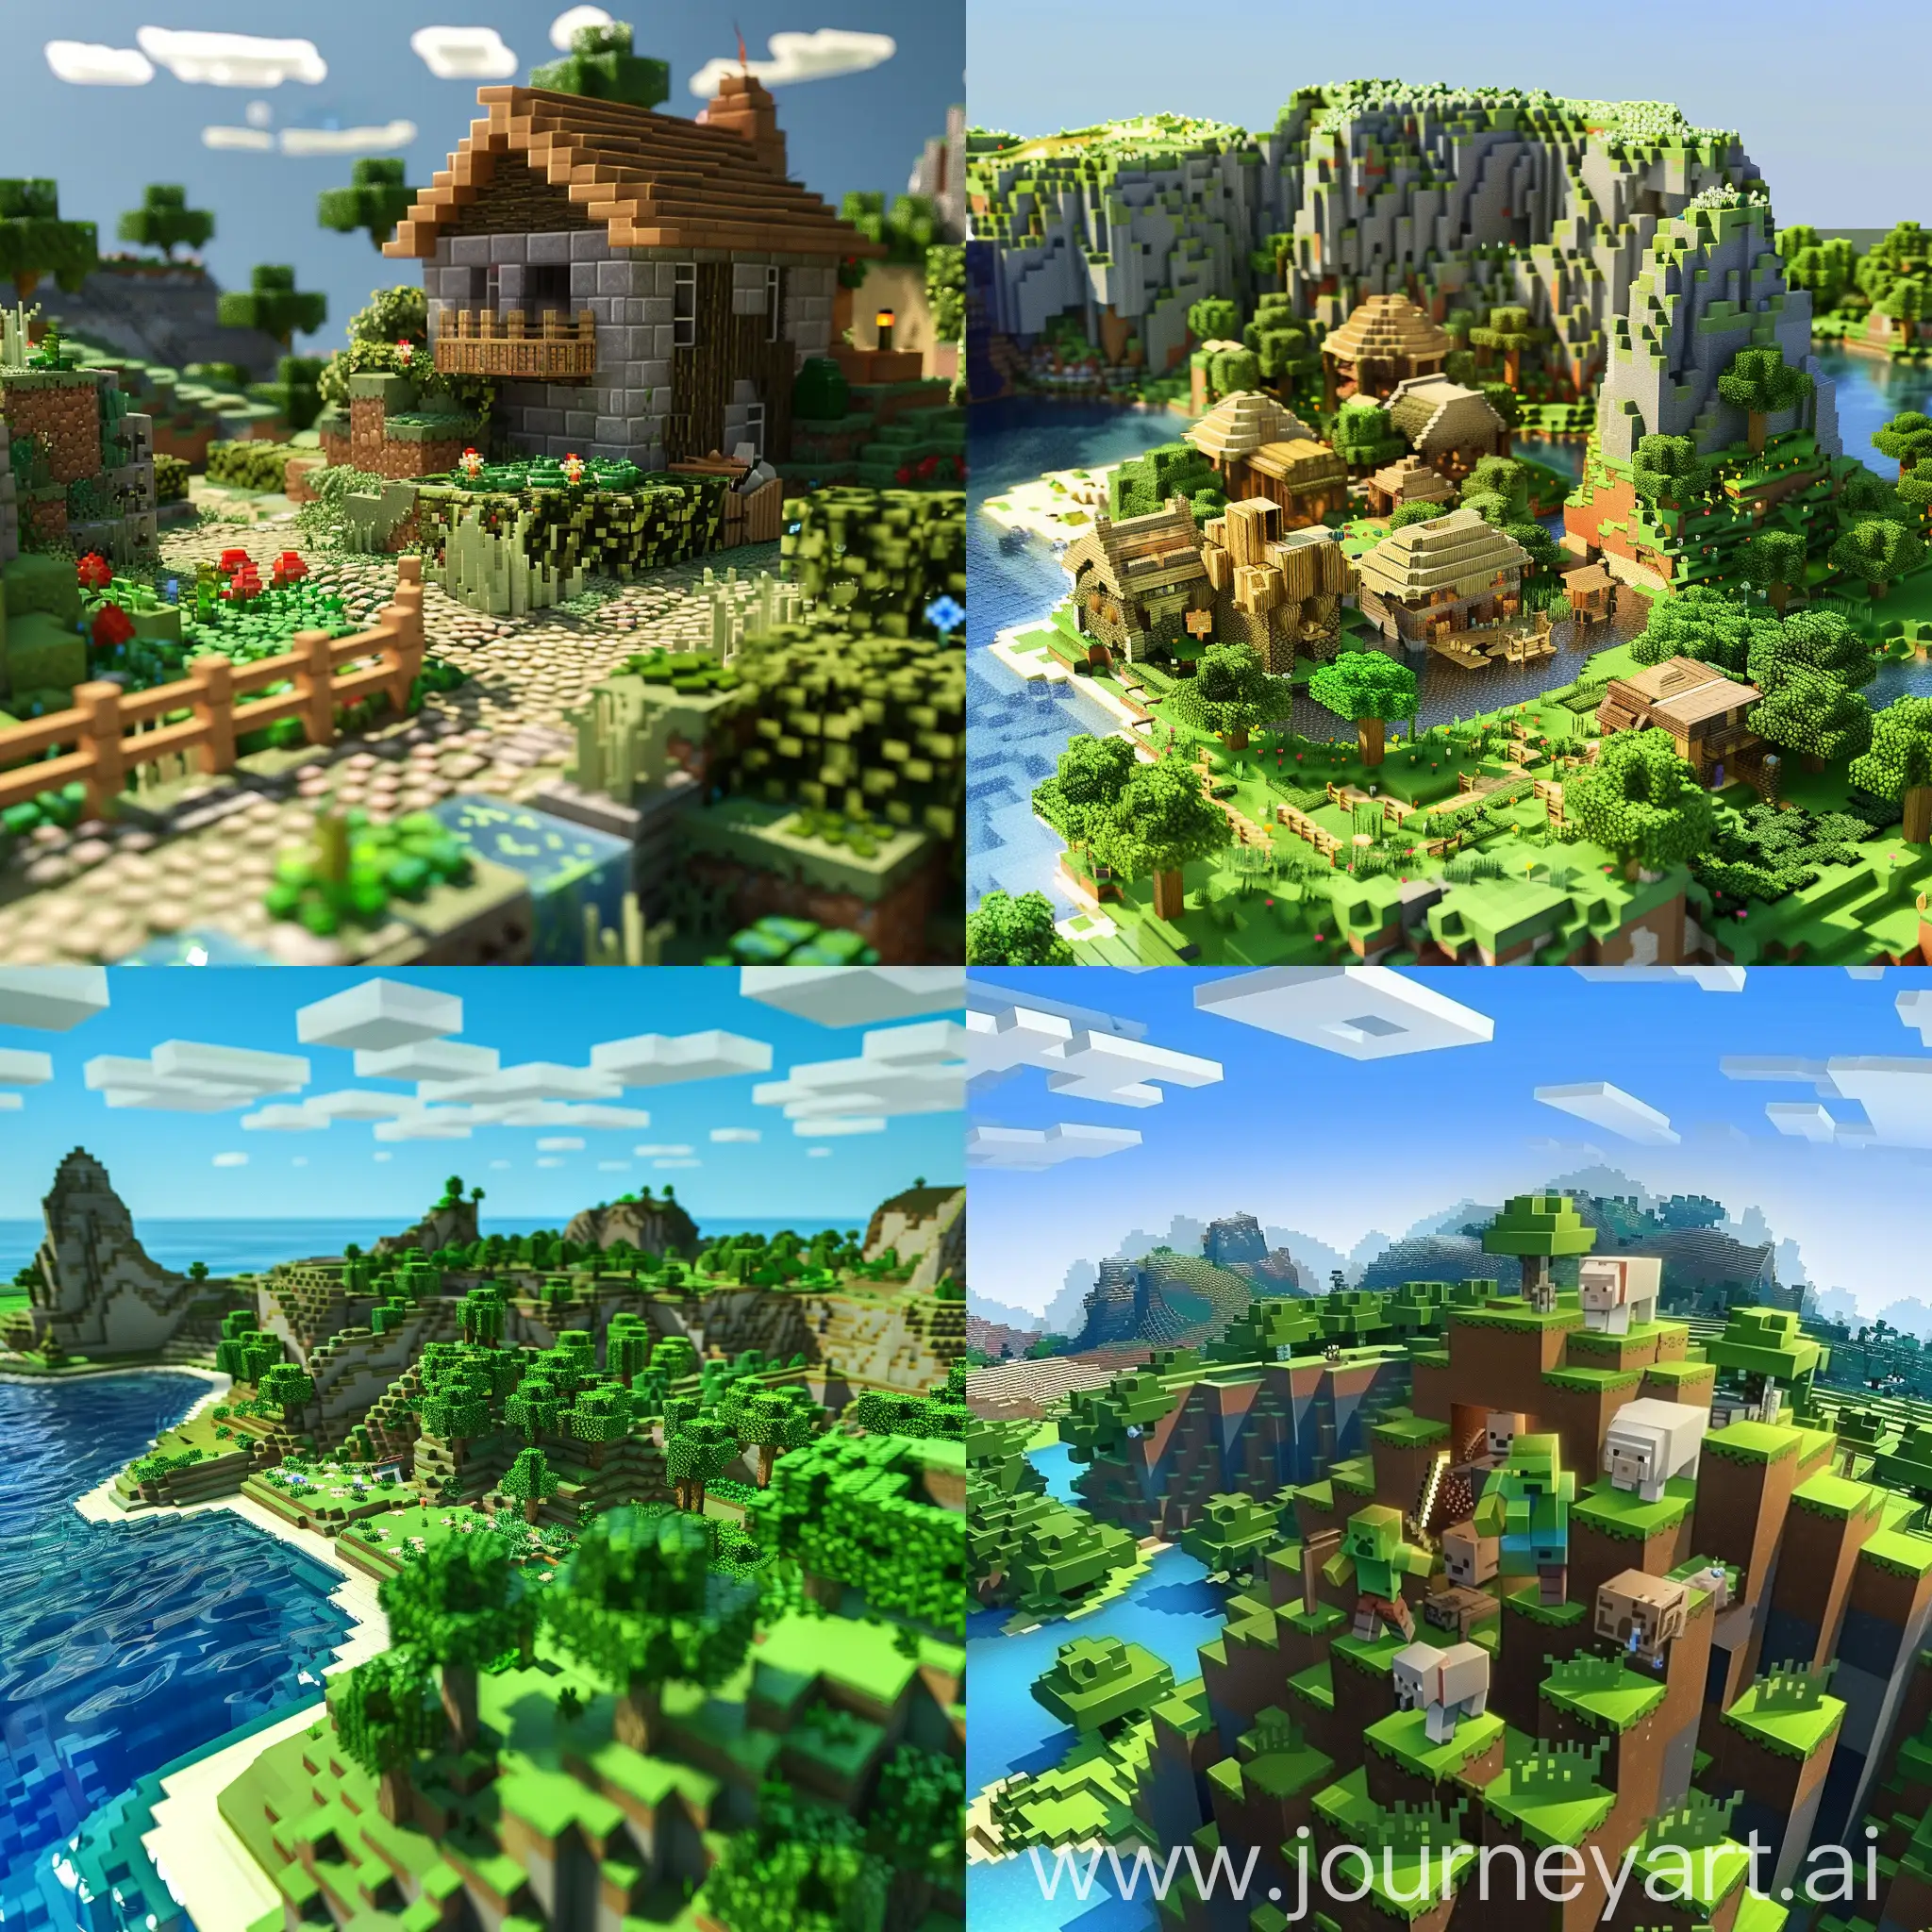 Exploring-a-3D-Minecraft-World